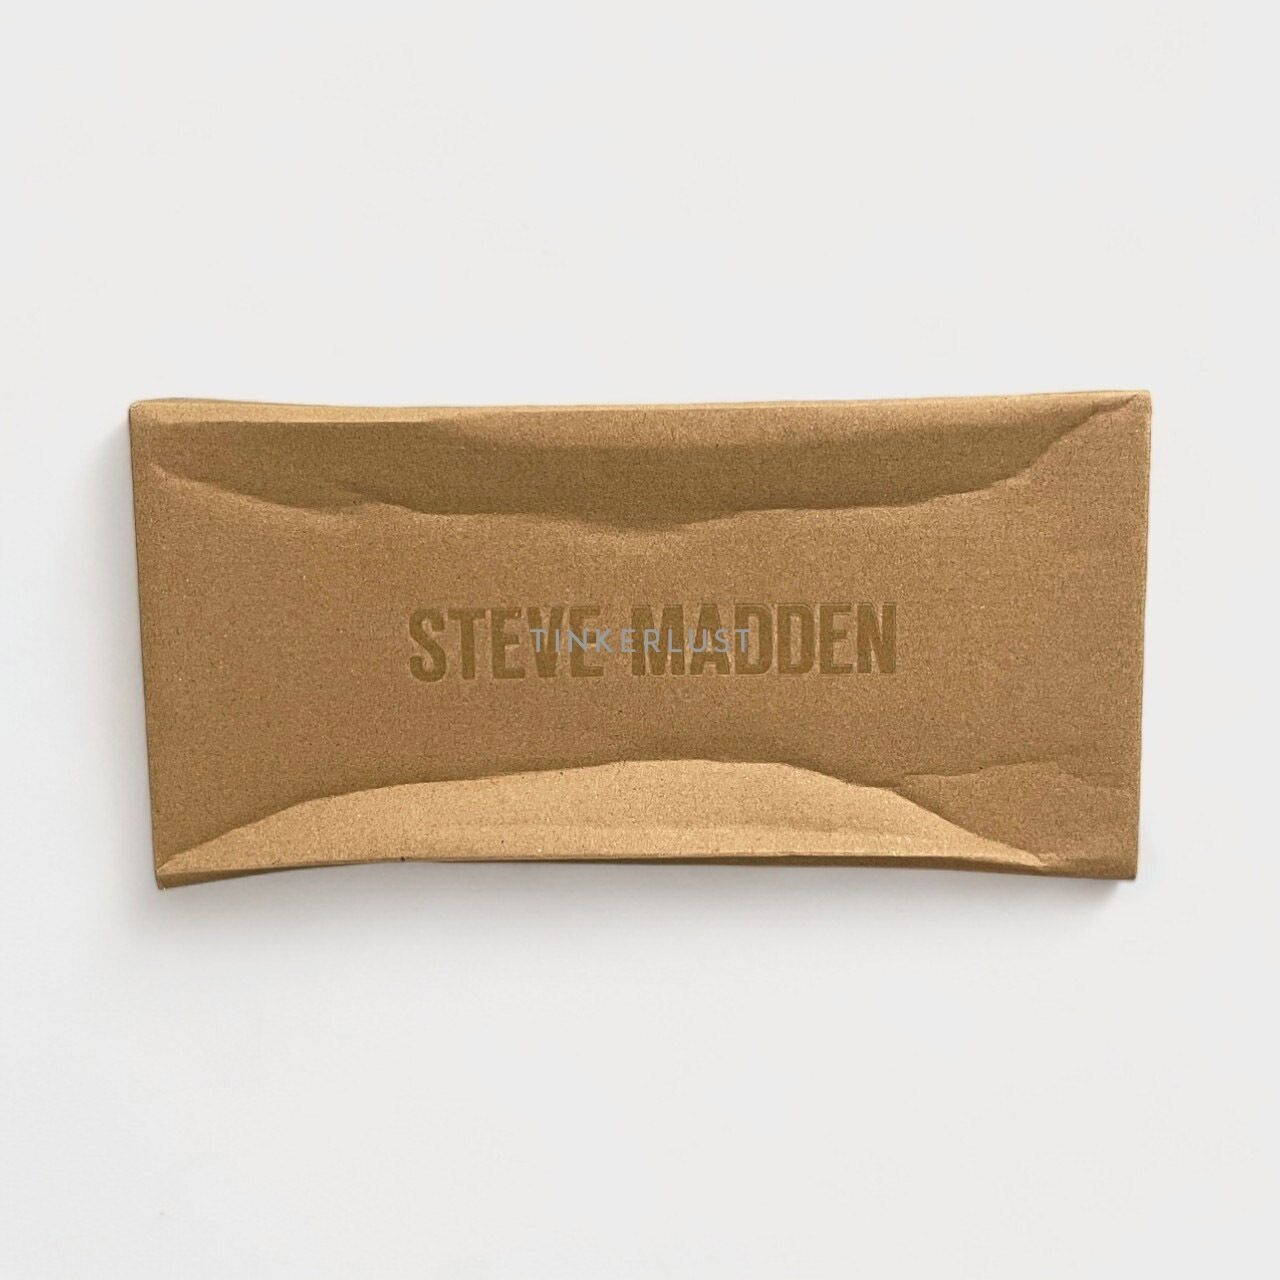 Steve Madden Lowrider Black Patent Heels